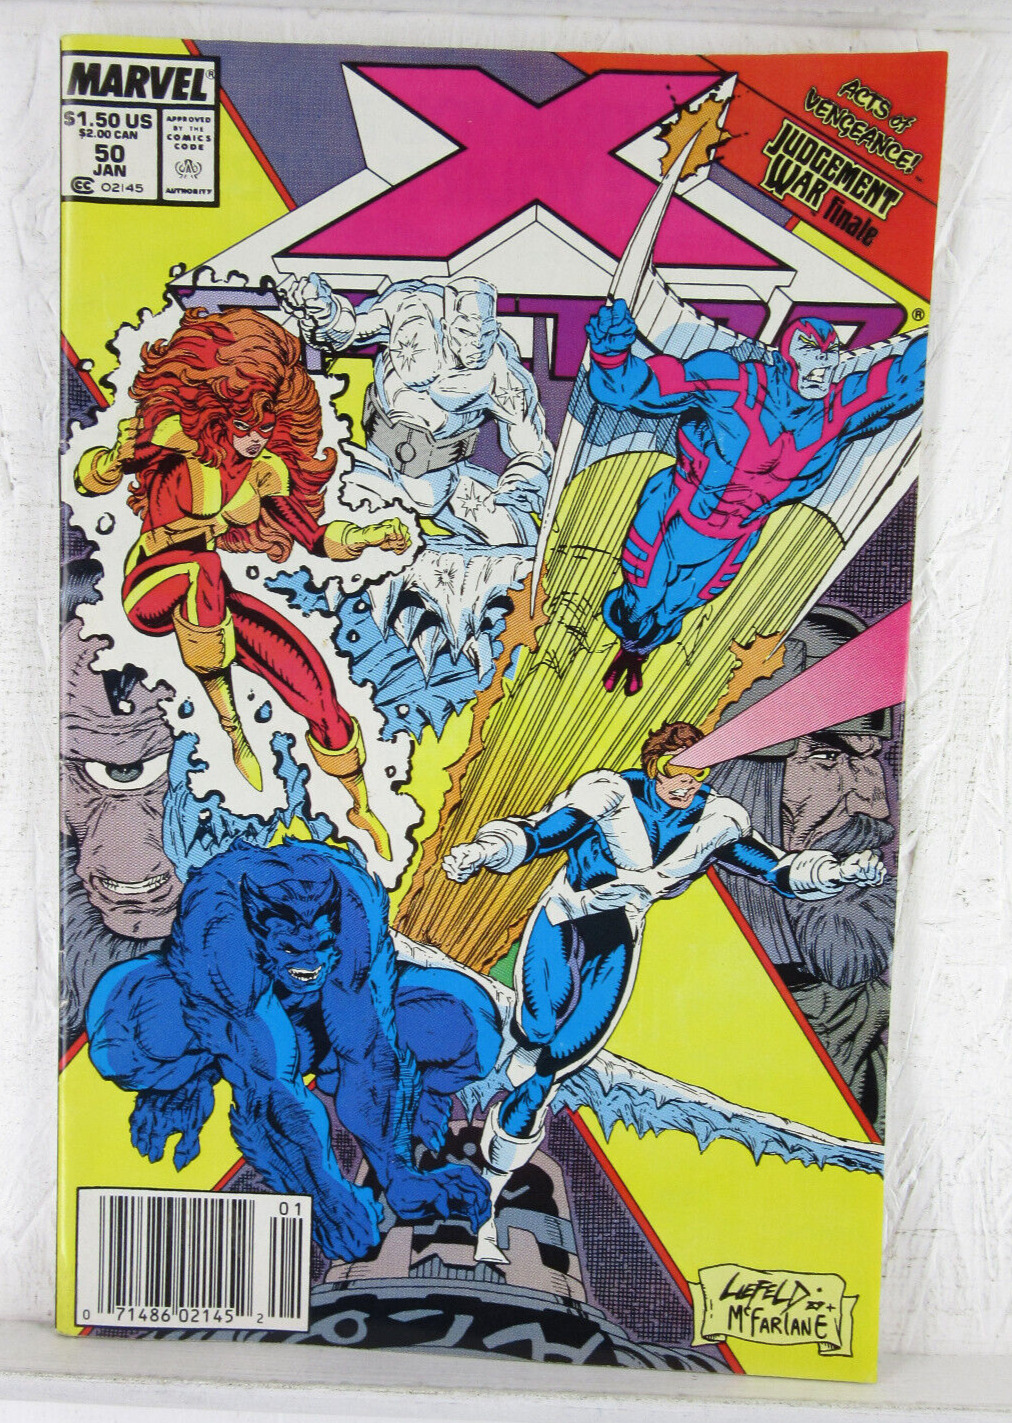 X-FACTOR #50 * Marvel Comics * 1990 -Comic Book Judgment Day